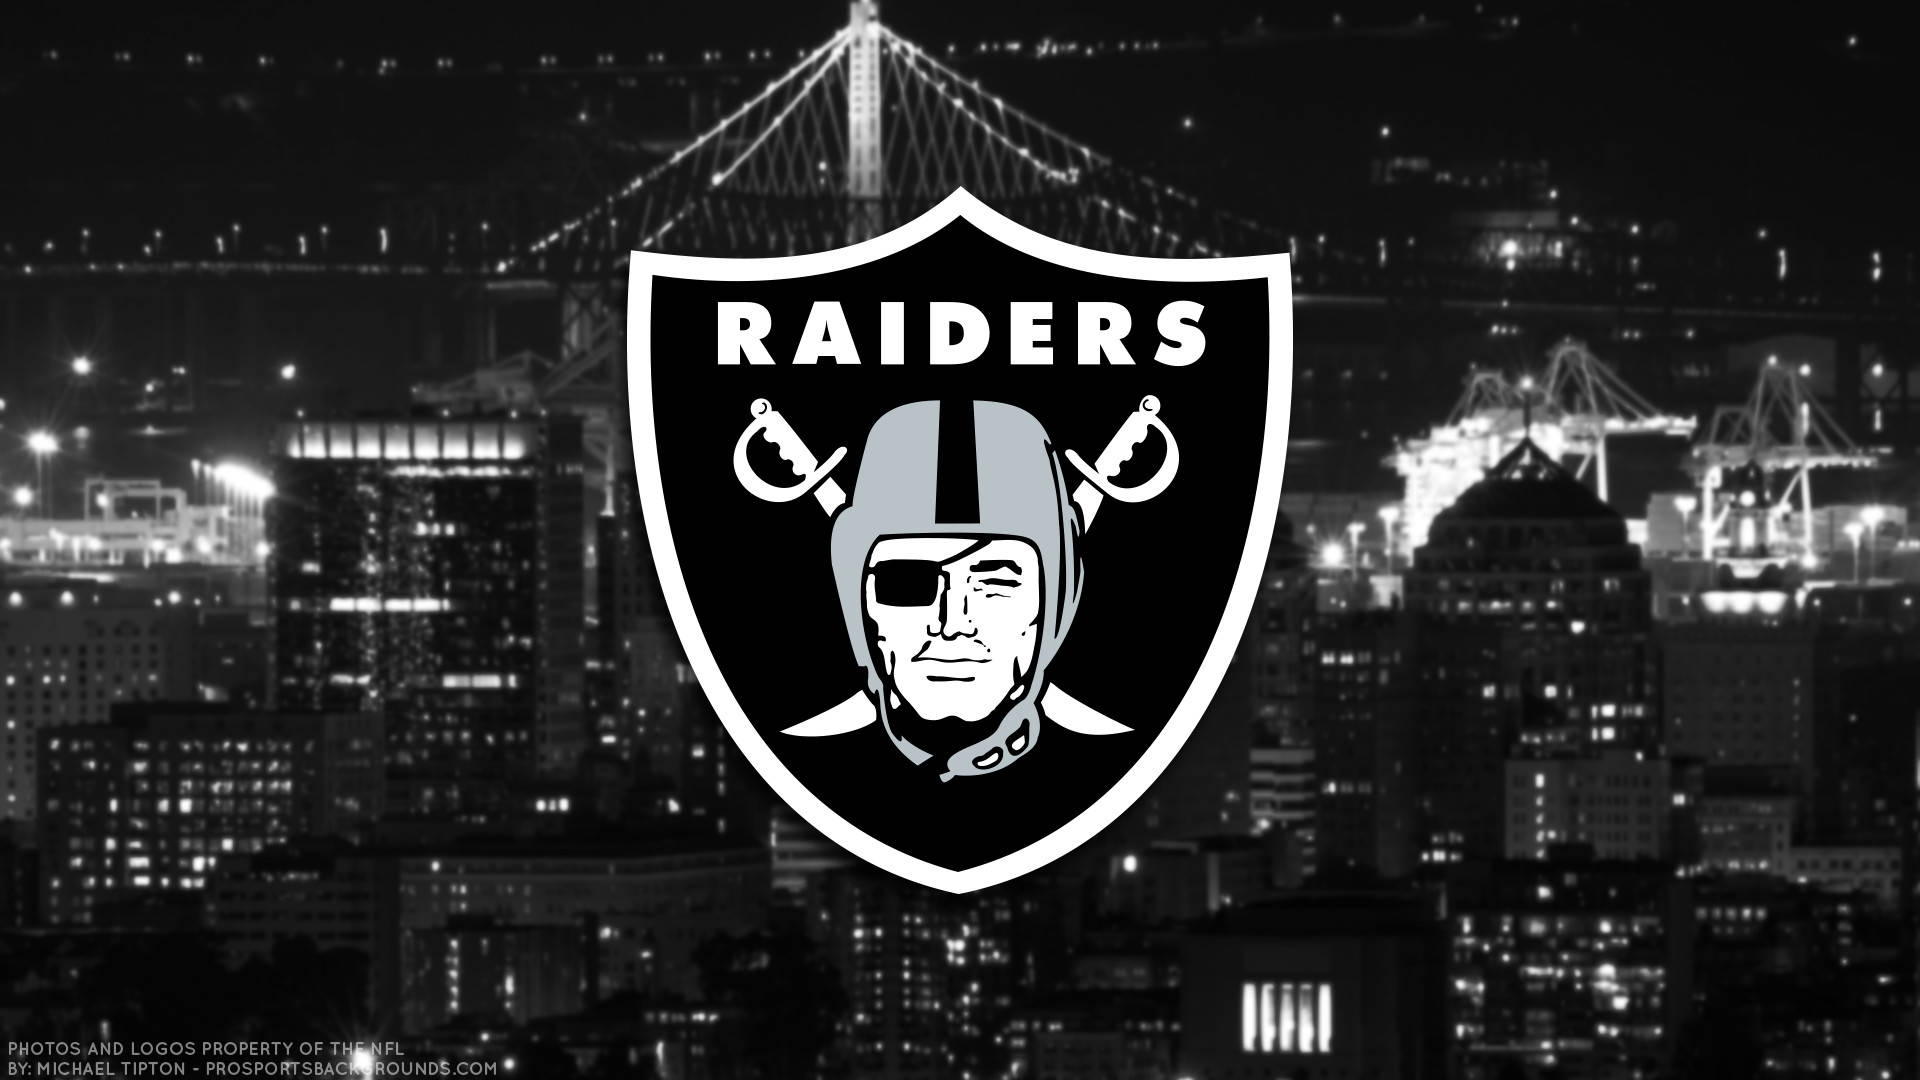 Fondode Pantalla Para Computadora De Escritorio Con El Logotipo De Raiders Fondo de pantalla